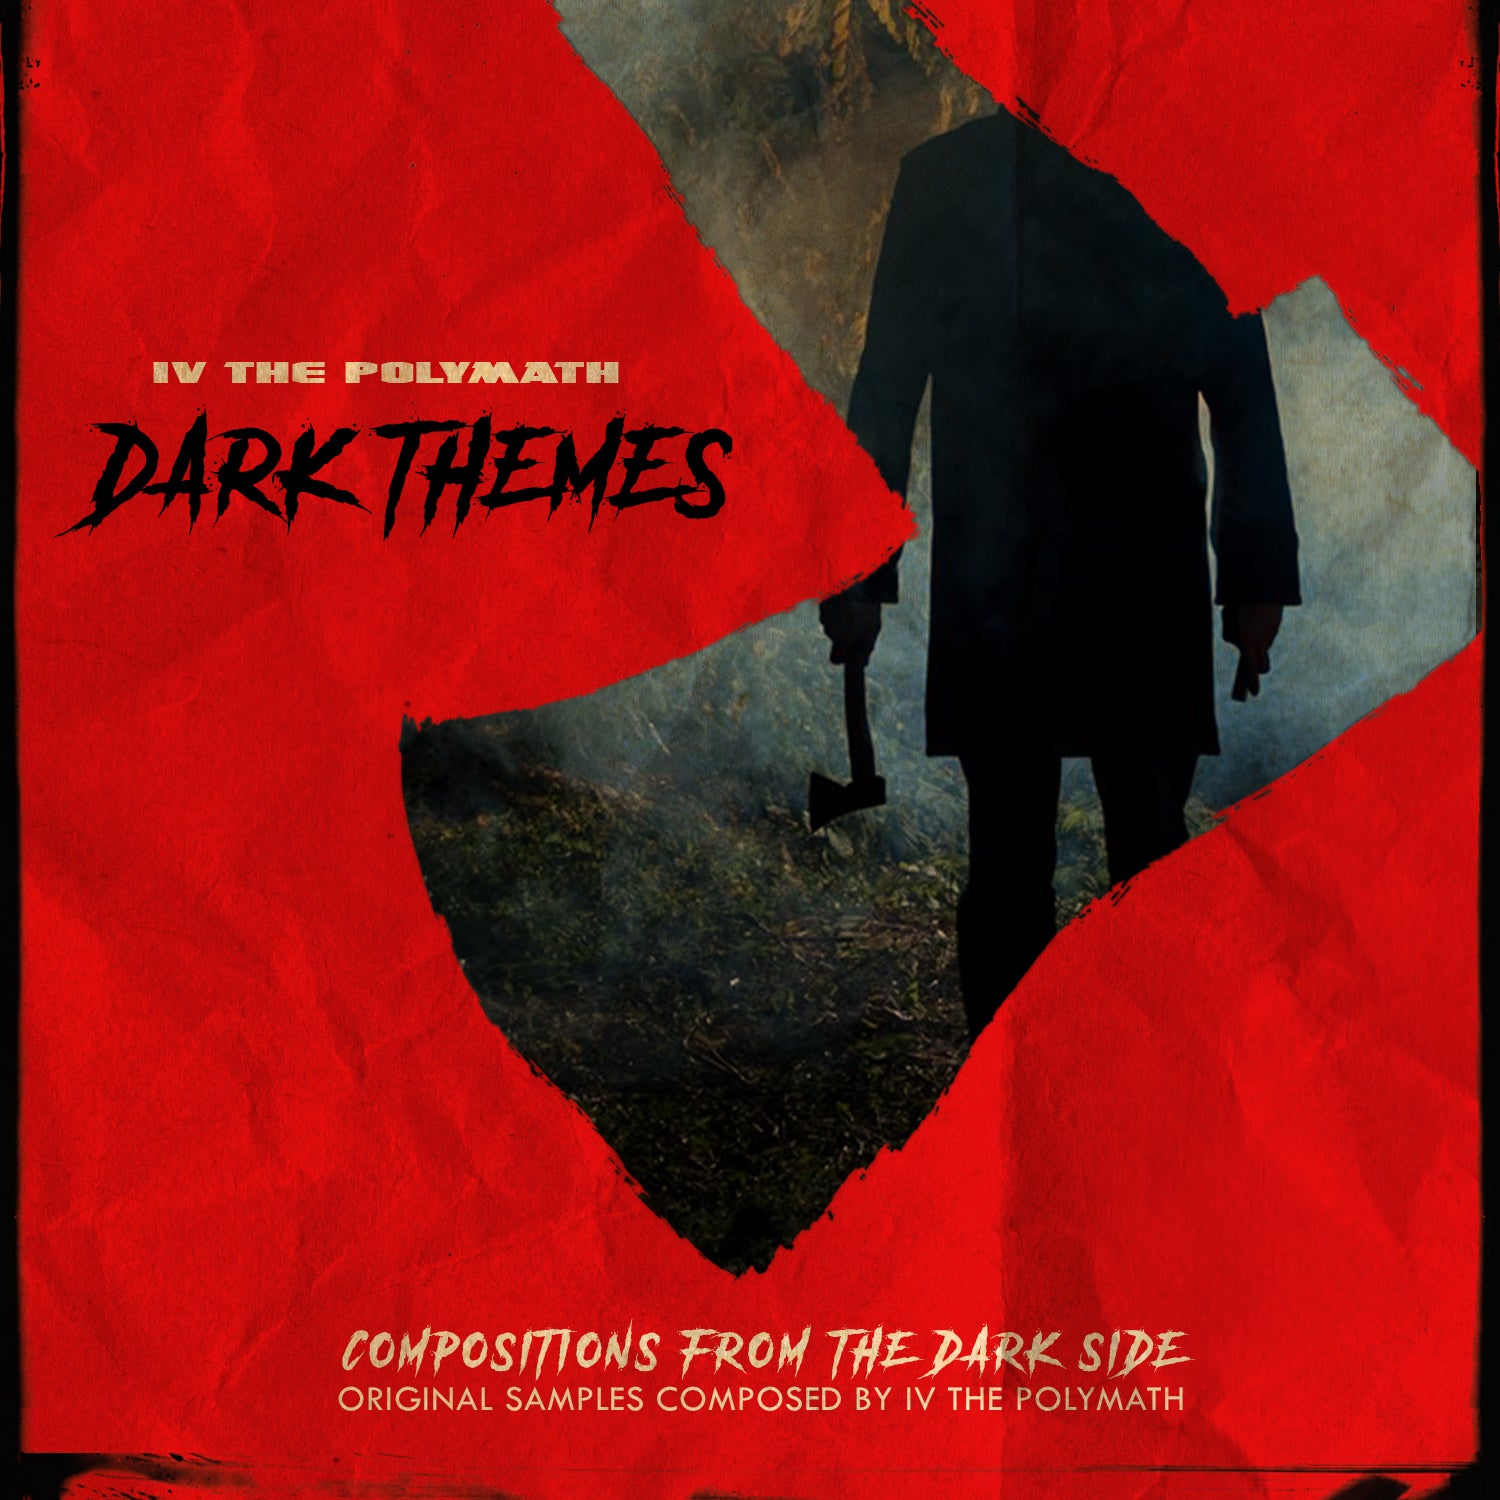 Dark Themes (Sample Pack) by IV The Polymath